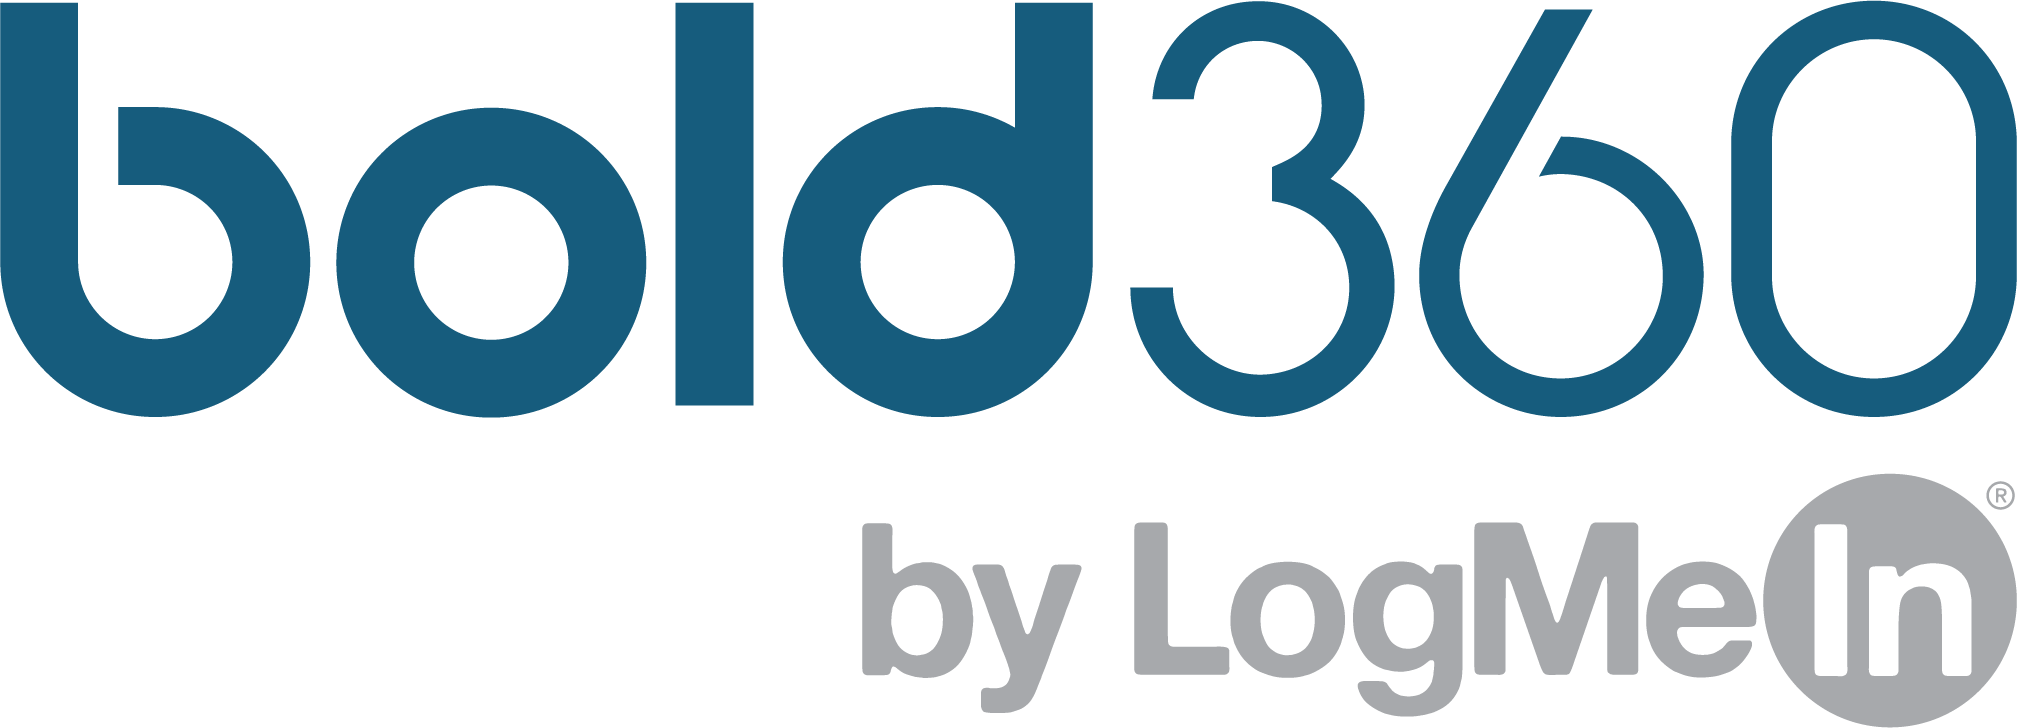 LMI Bold360 HEX - 2018 Customer Service Trends